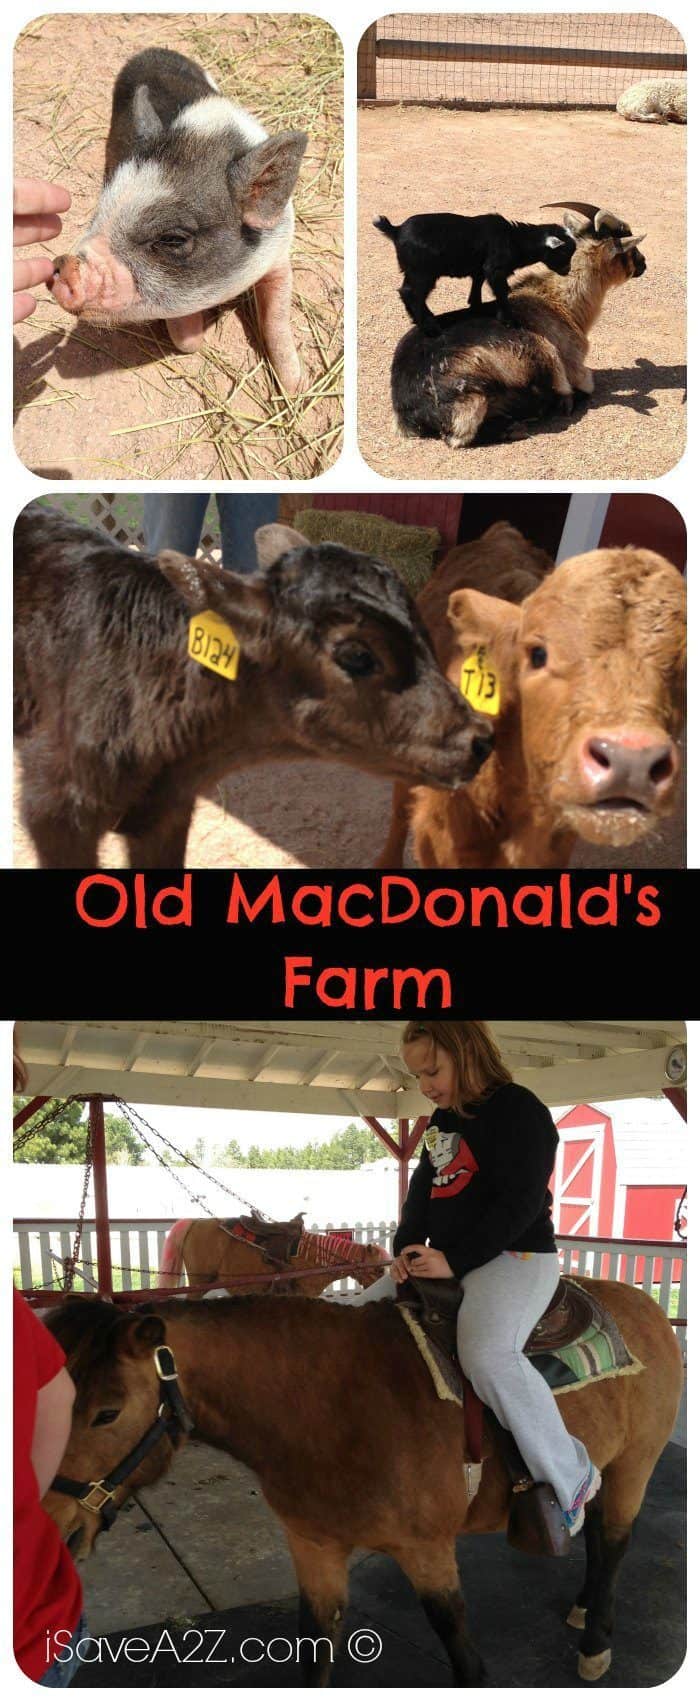 Old MacDonald's Farm in Rapid City, South Dakota